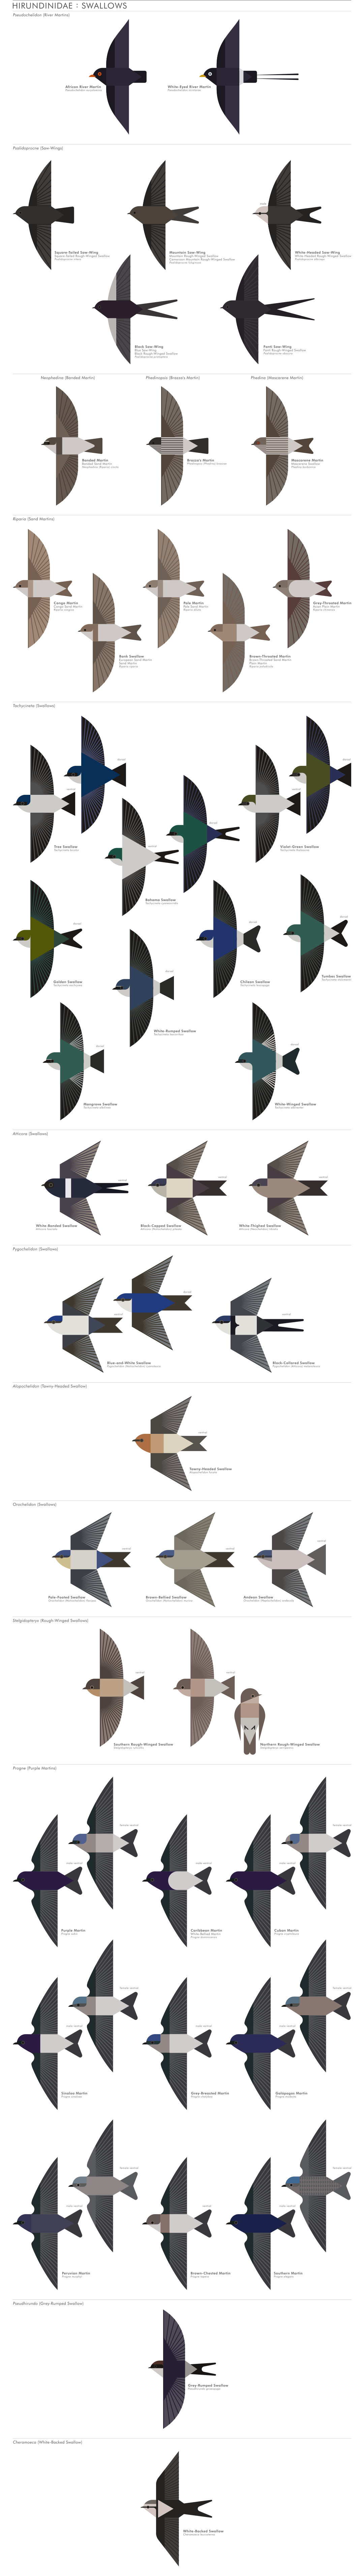 scott partridge - AVE - avian vector encyclopedia - swallows - bird vector art